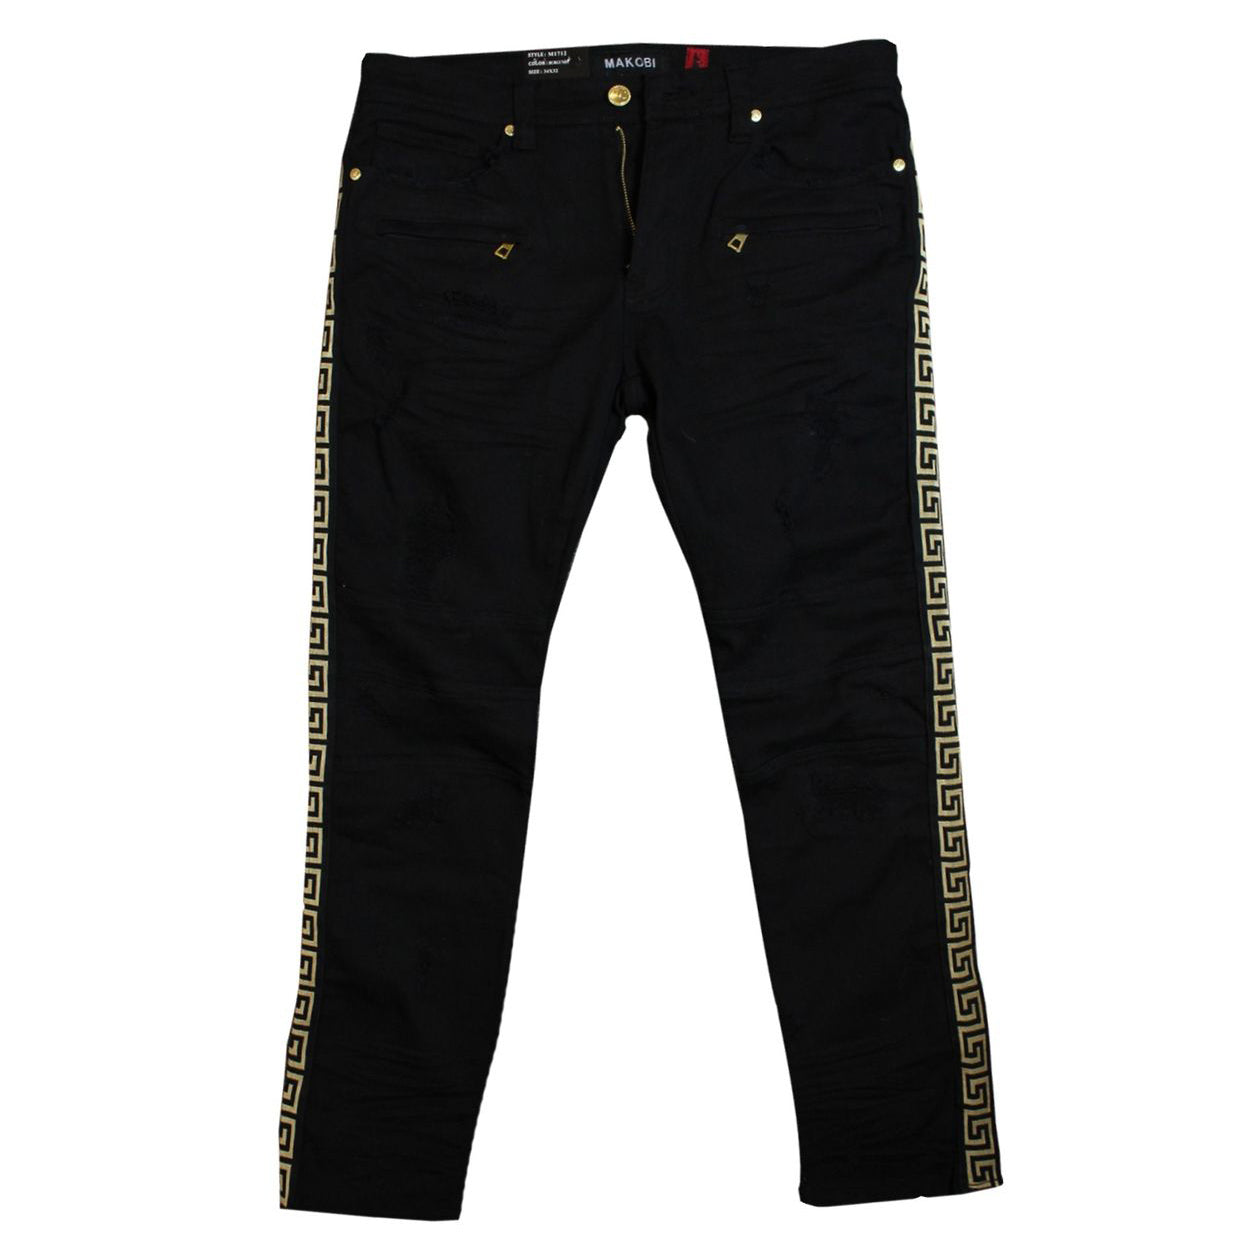 M1727 Makobi Biker Jeans with Side Taping - Black/Black